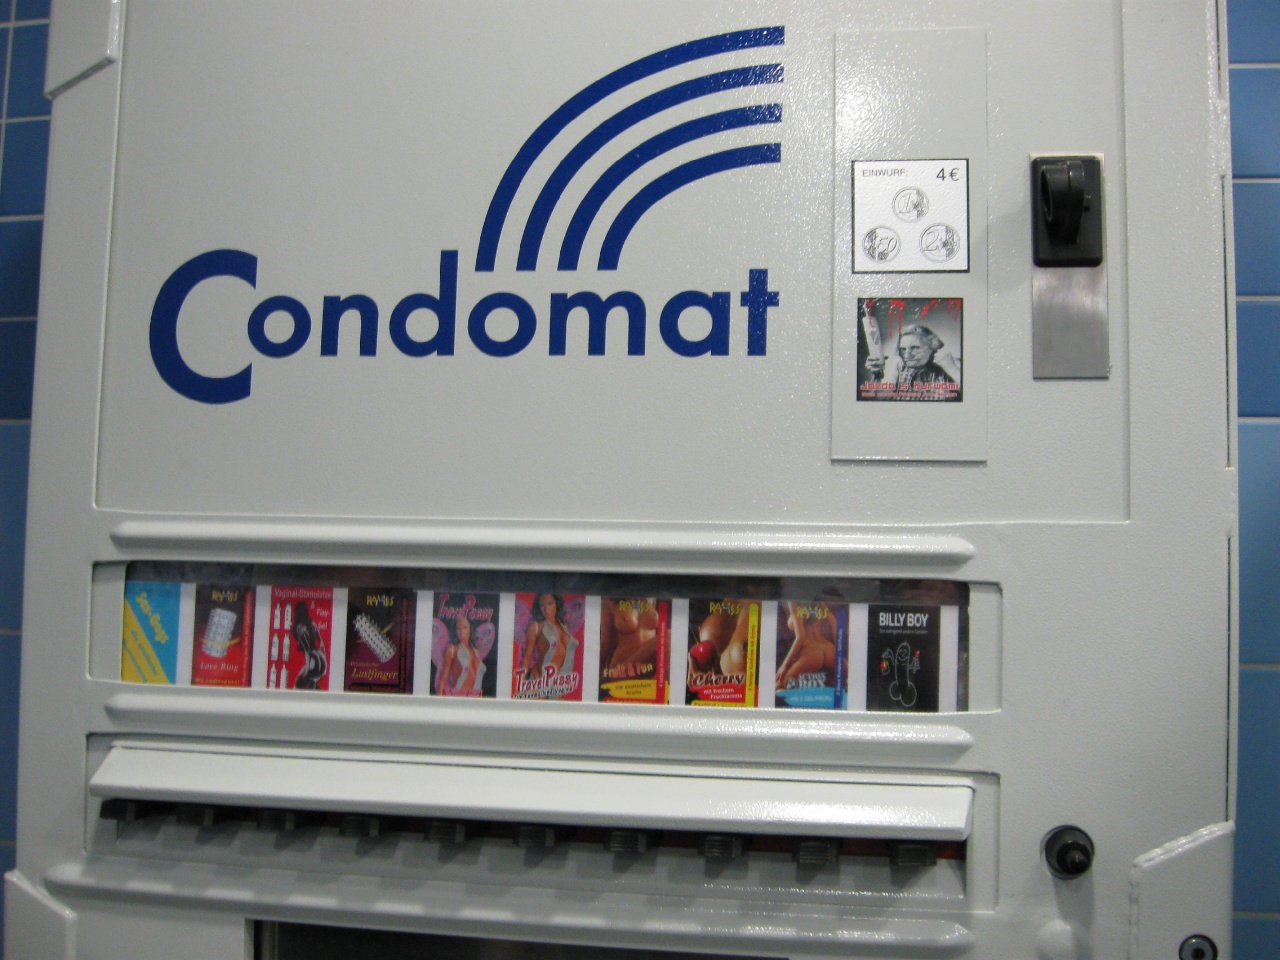 Nähe der kondomautomat in Polizei Archive